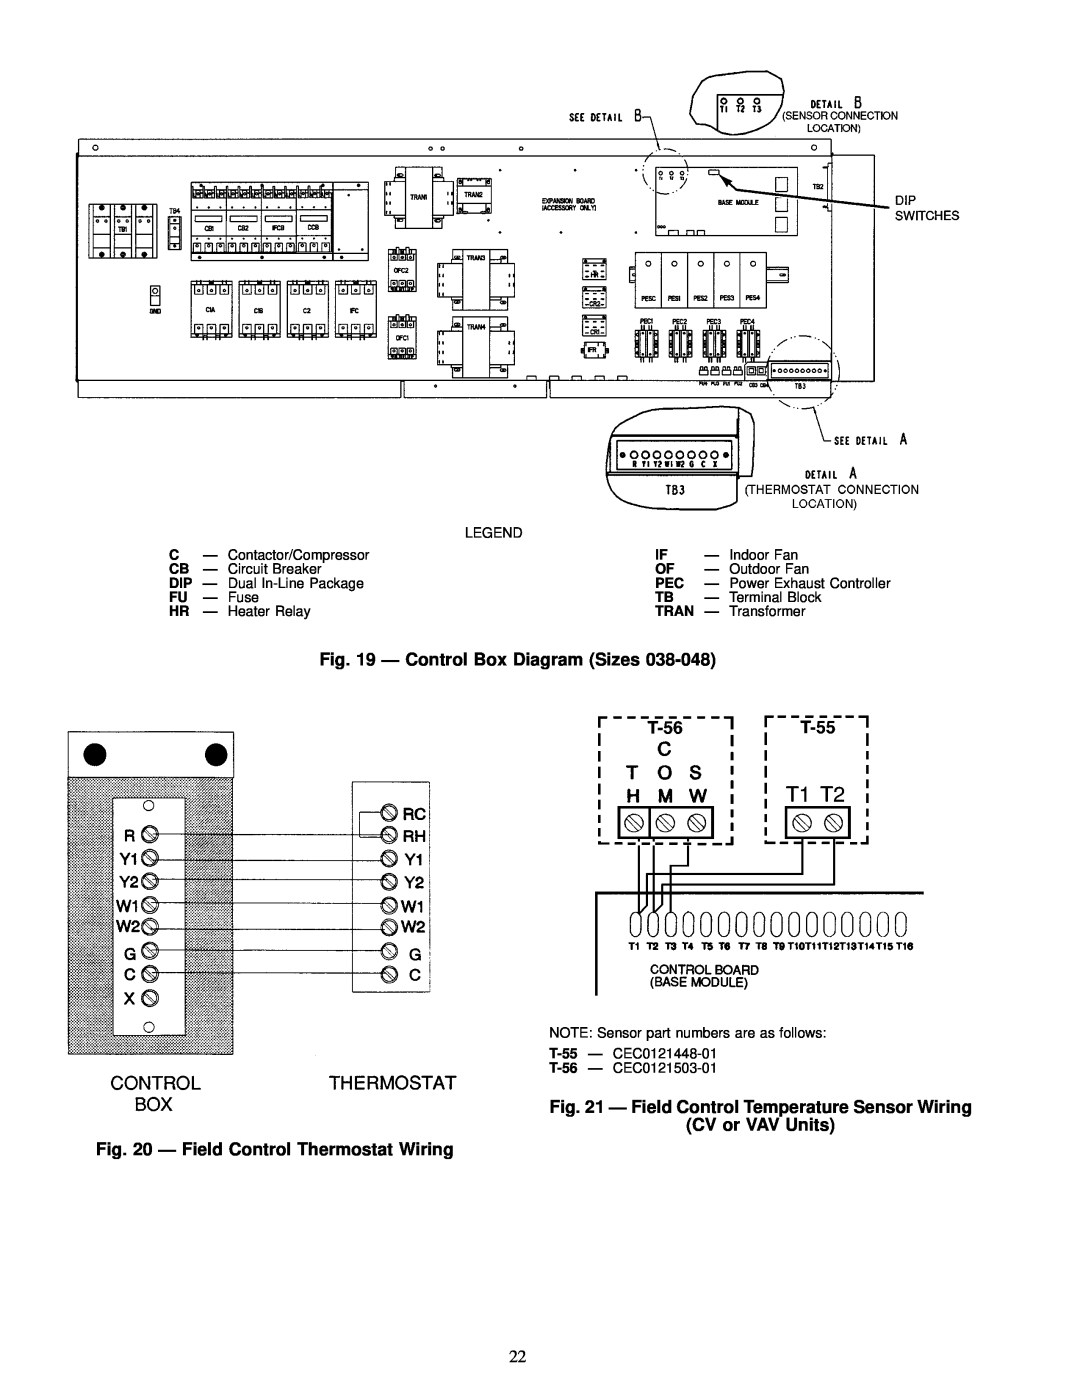 Carrier EK, 48EJ, EW, EY024-048 Ð Control Box Diagram Sizes, Ð Field Control Temperature Sensor Wiring, CV or VAV Units 